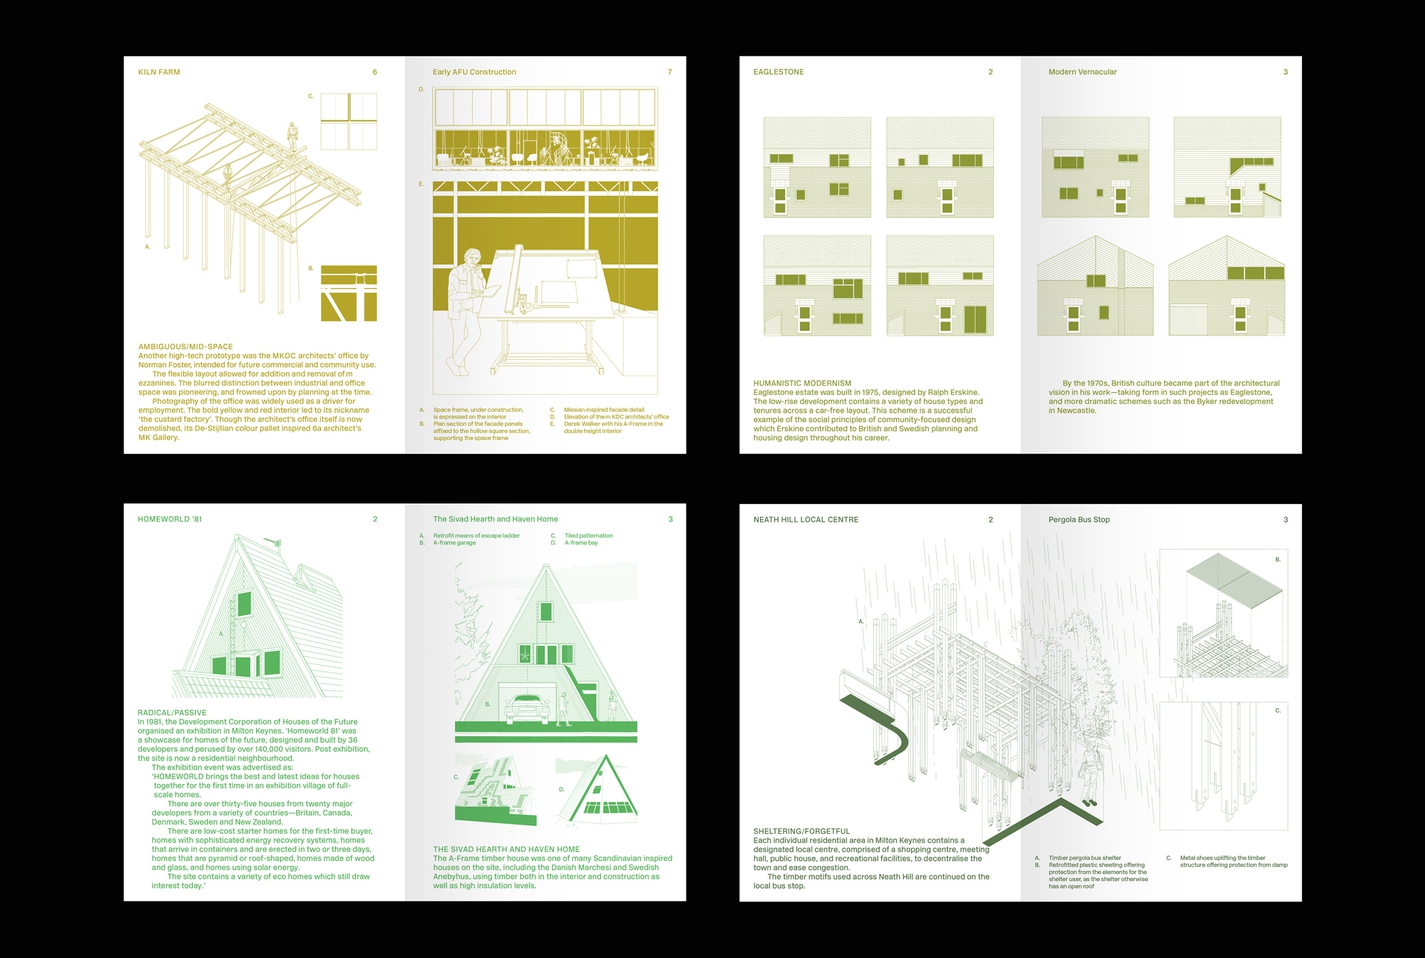 bob-design-newtown-publication-mk-spread-overview-97279.jpg